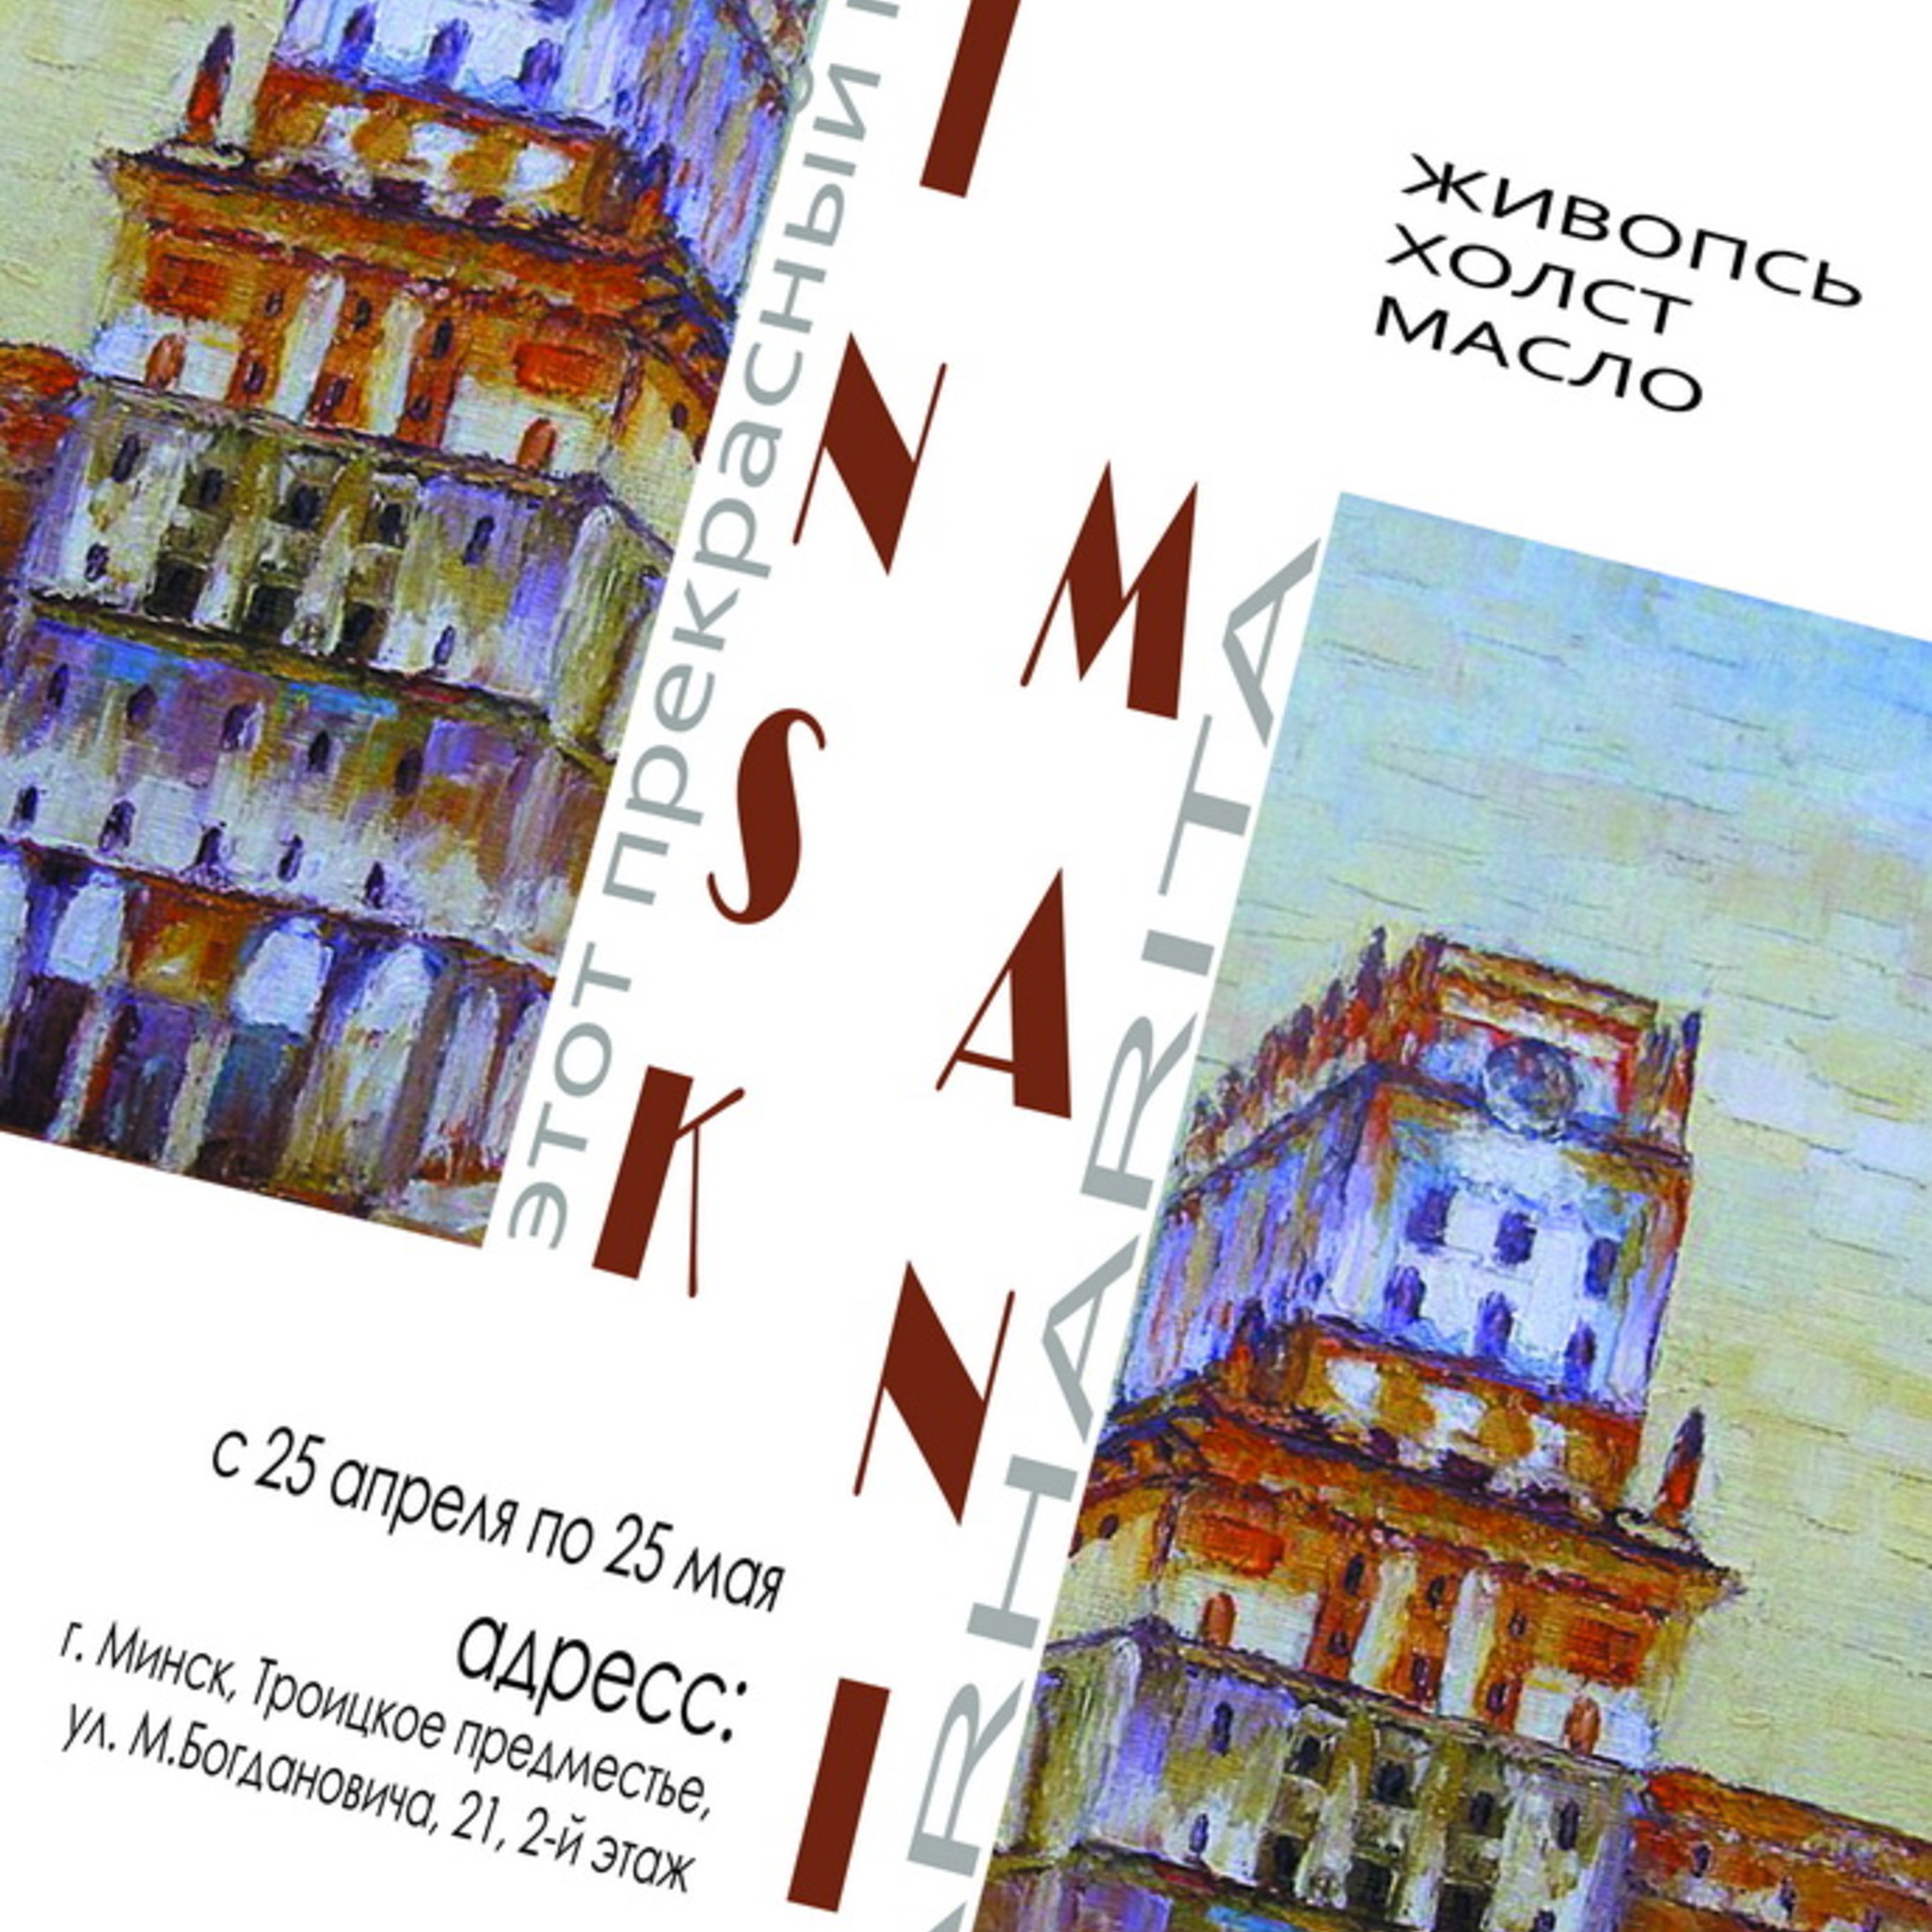 Painting Exhibition of Margarita Manis This beautiful Minsk